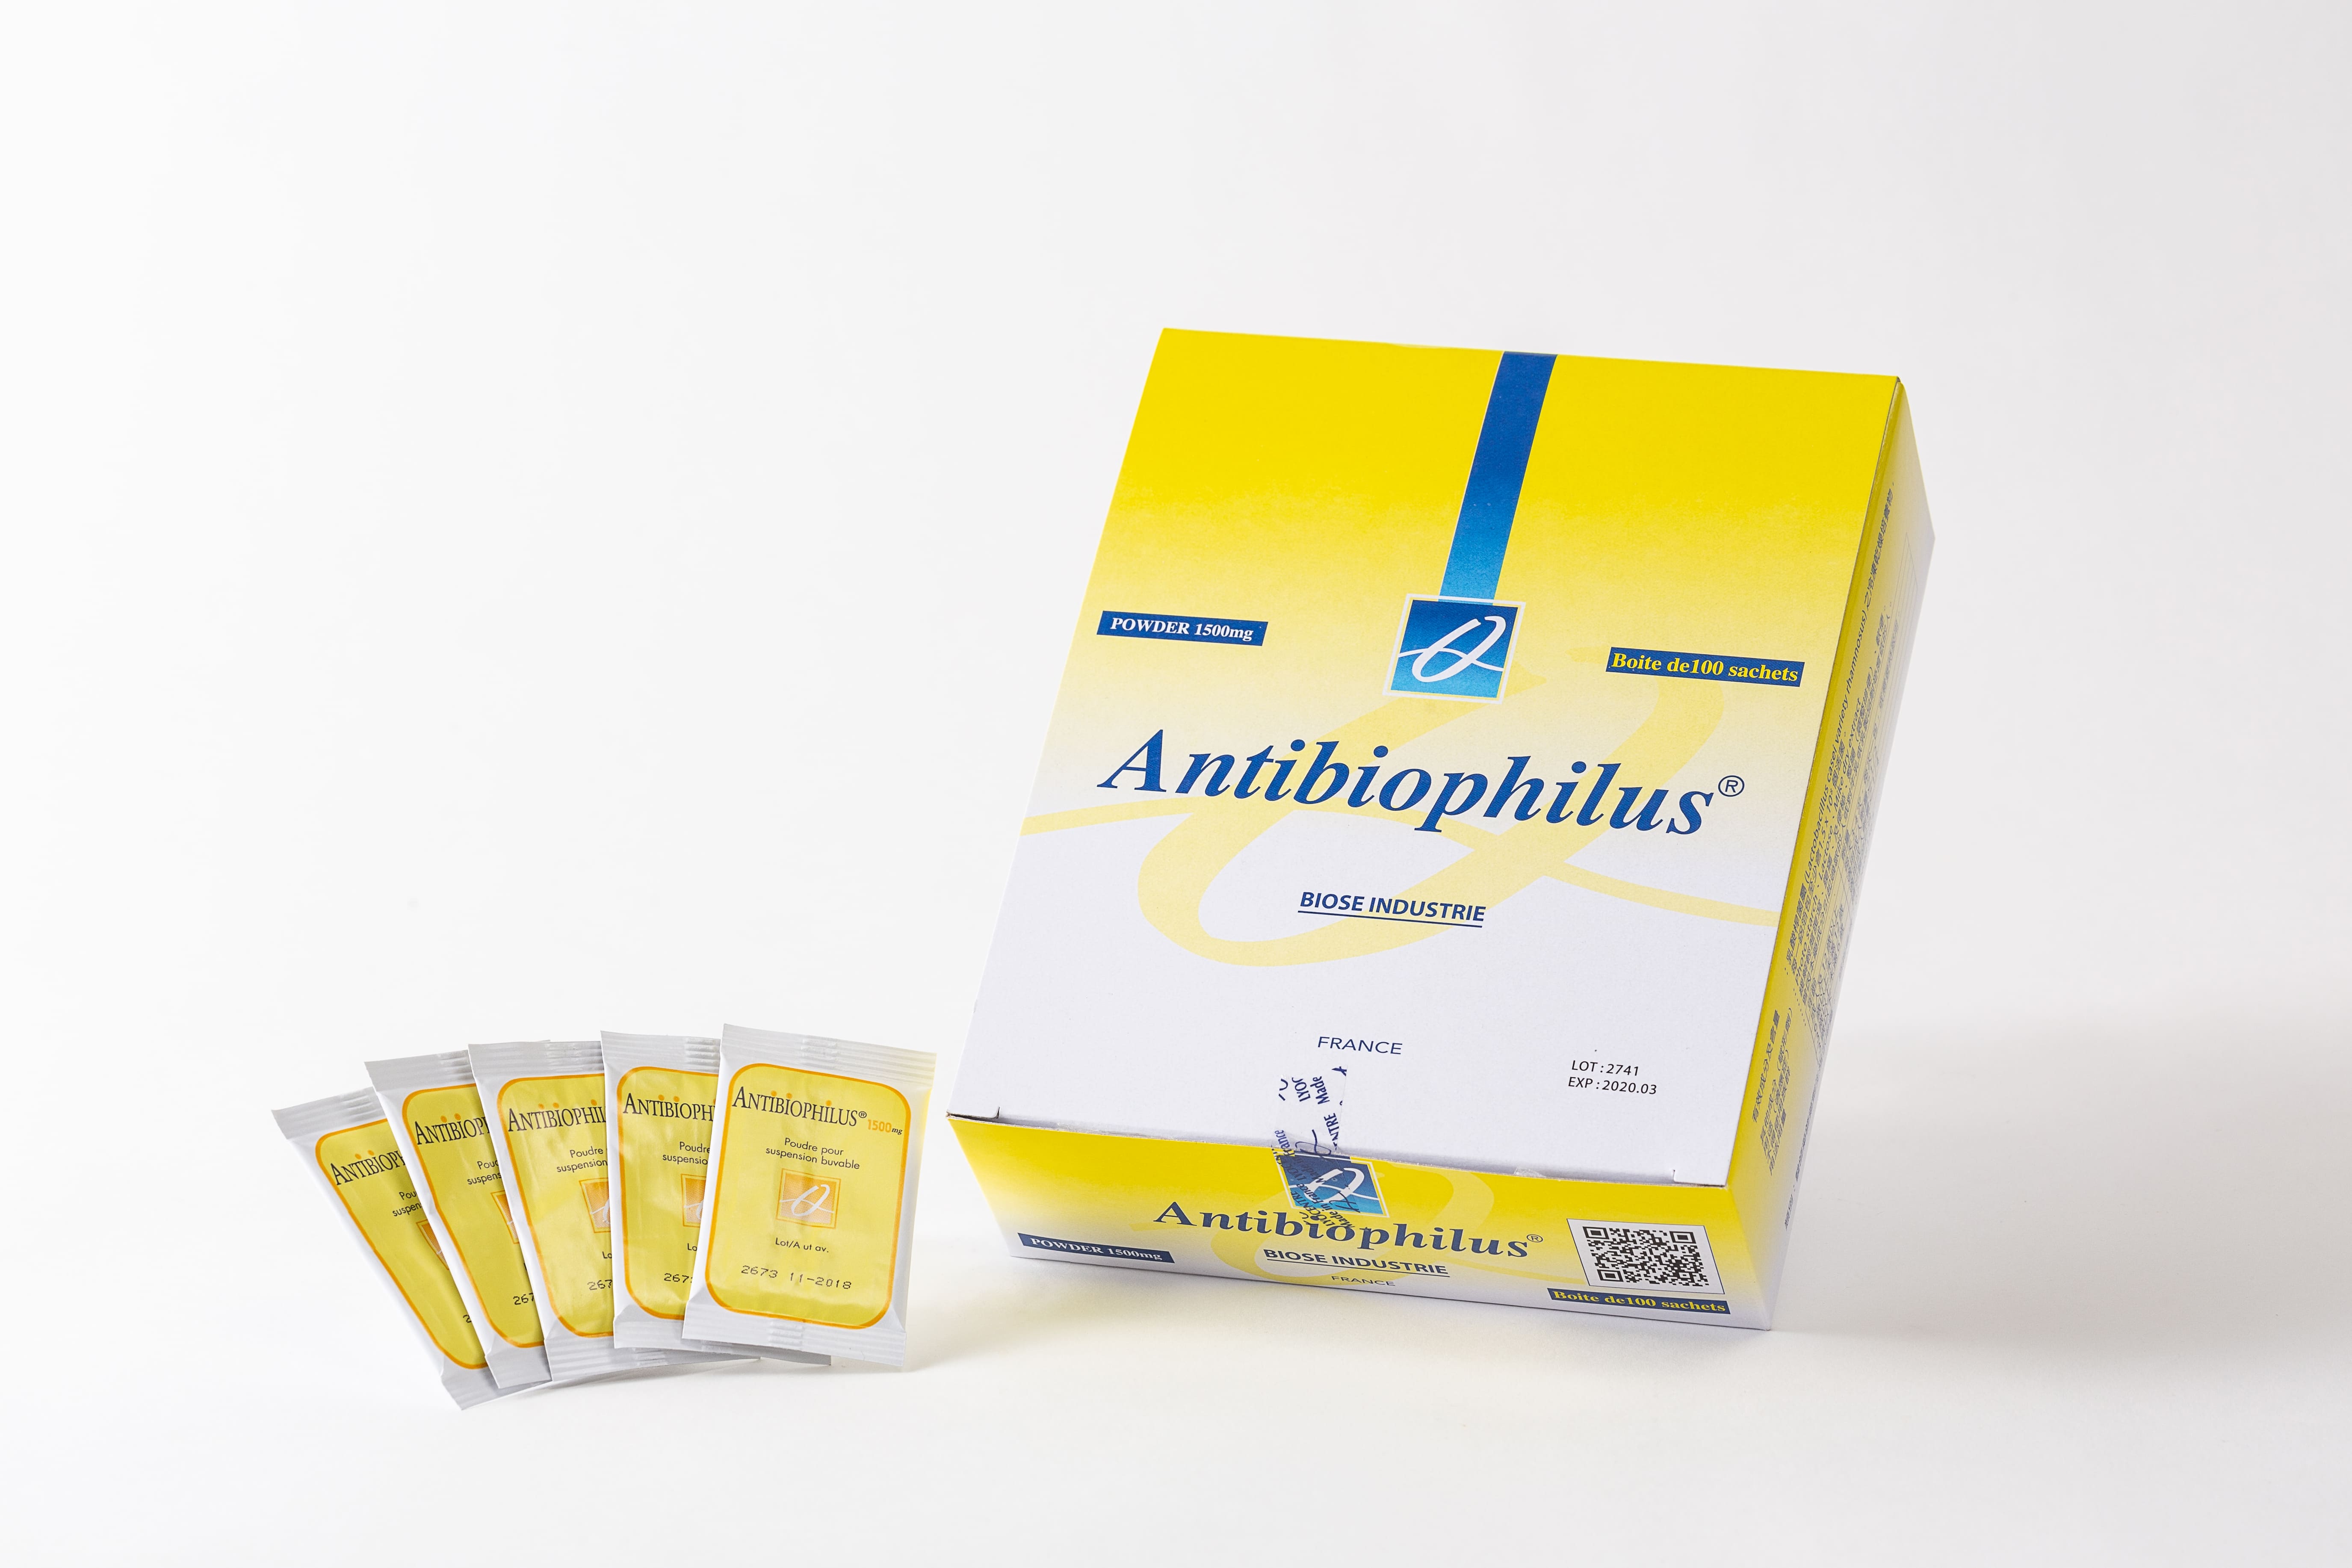 Antibiophilus powder